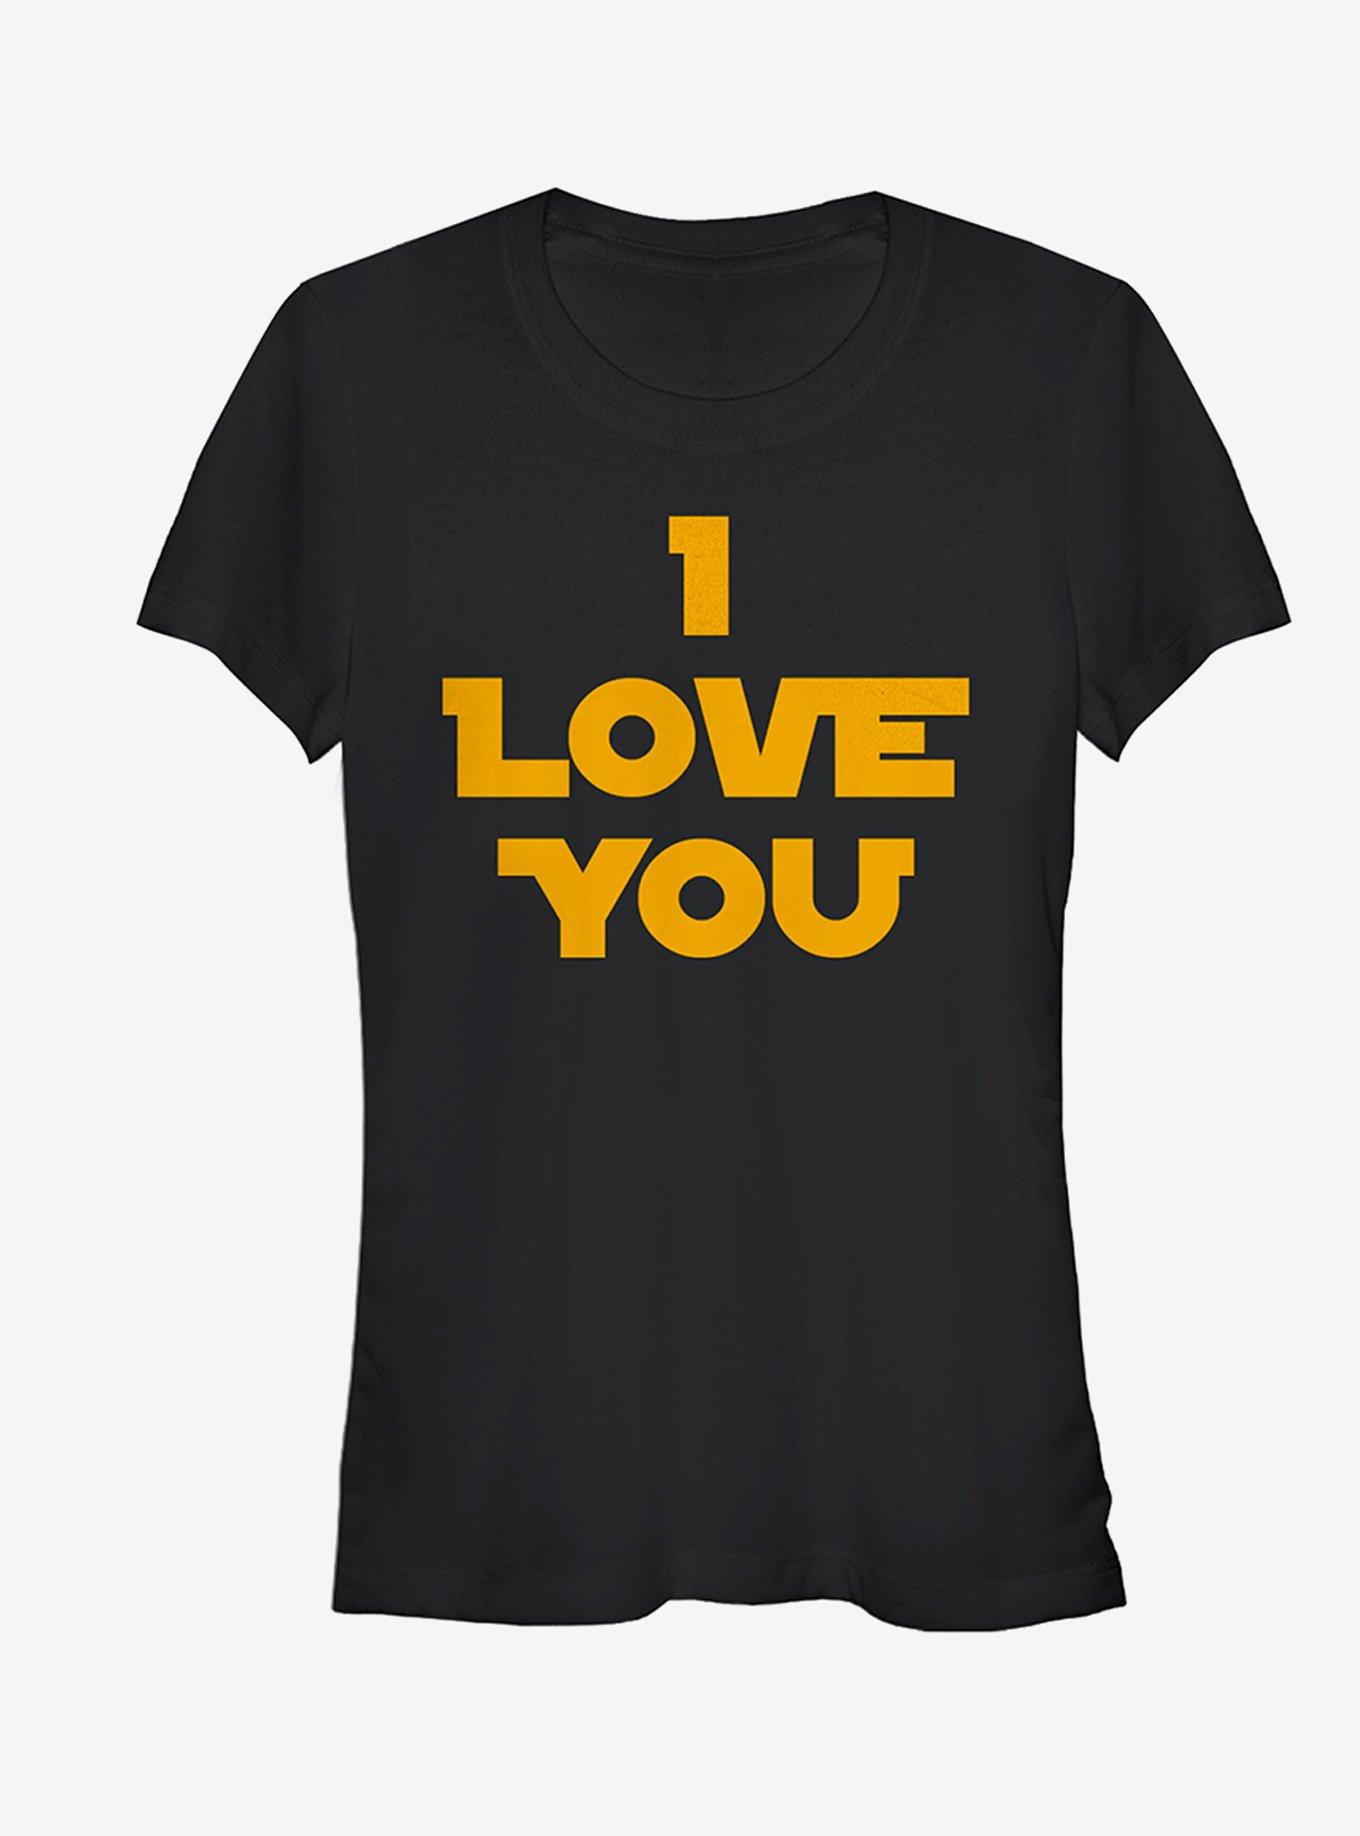 Star Wars Princess Leia I Love You Girls T-Shirt